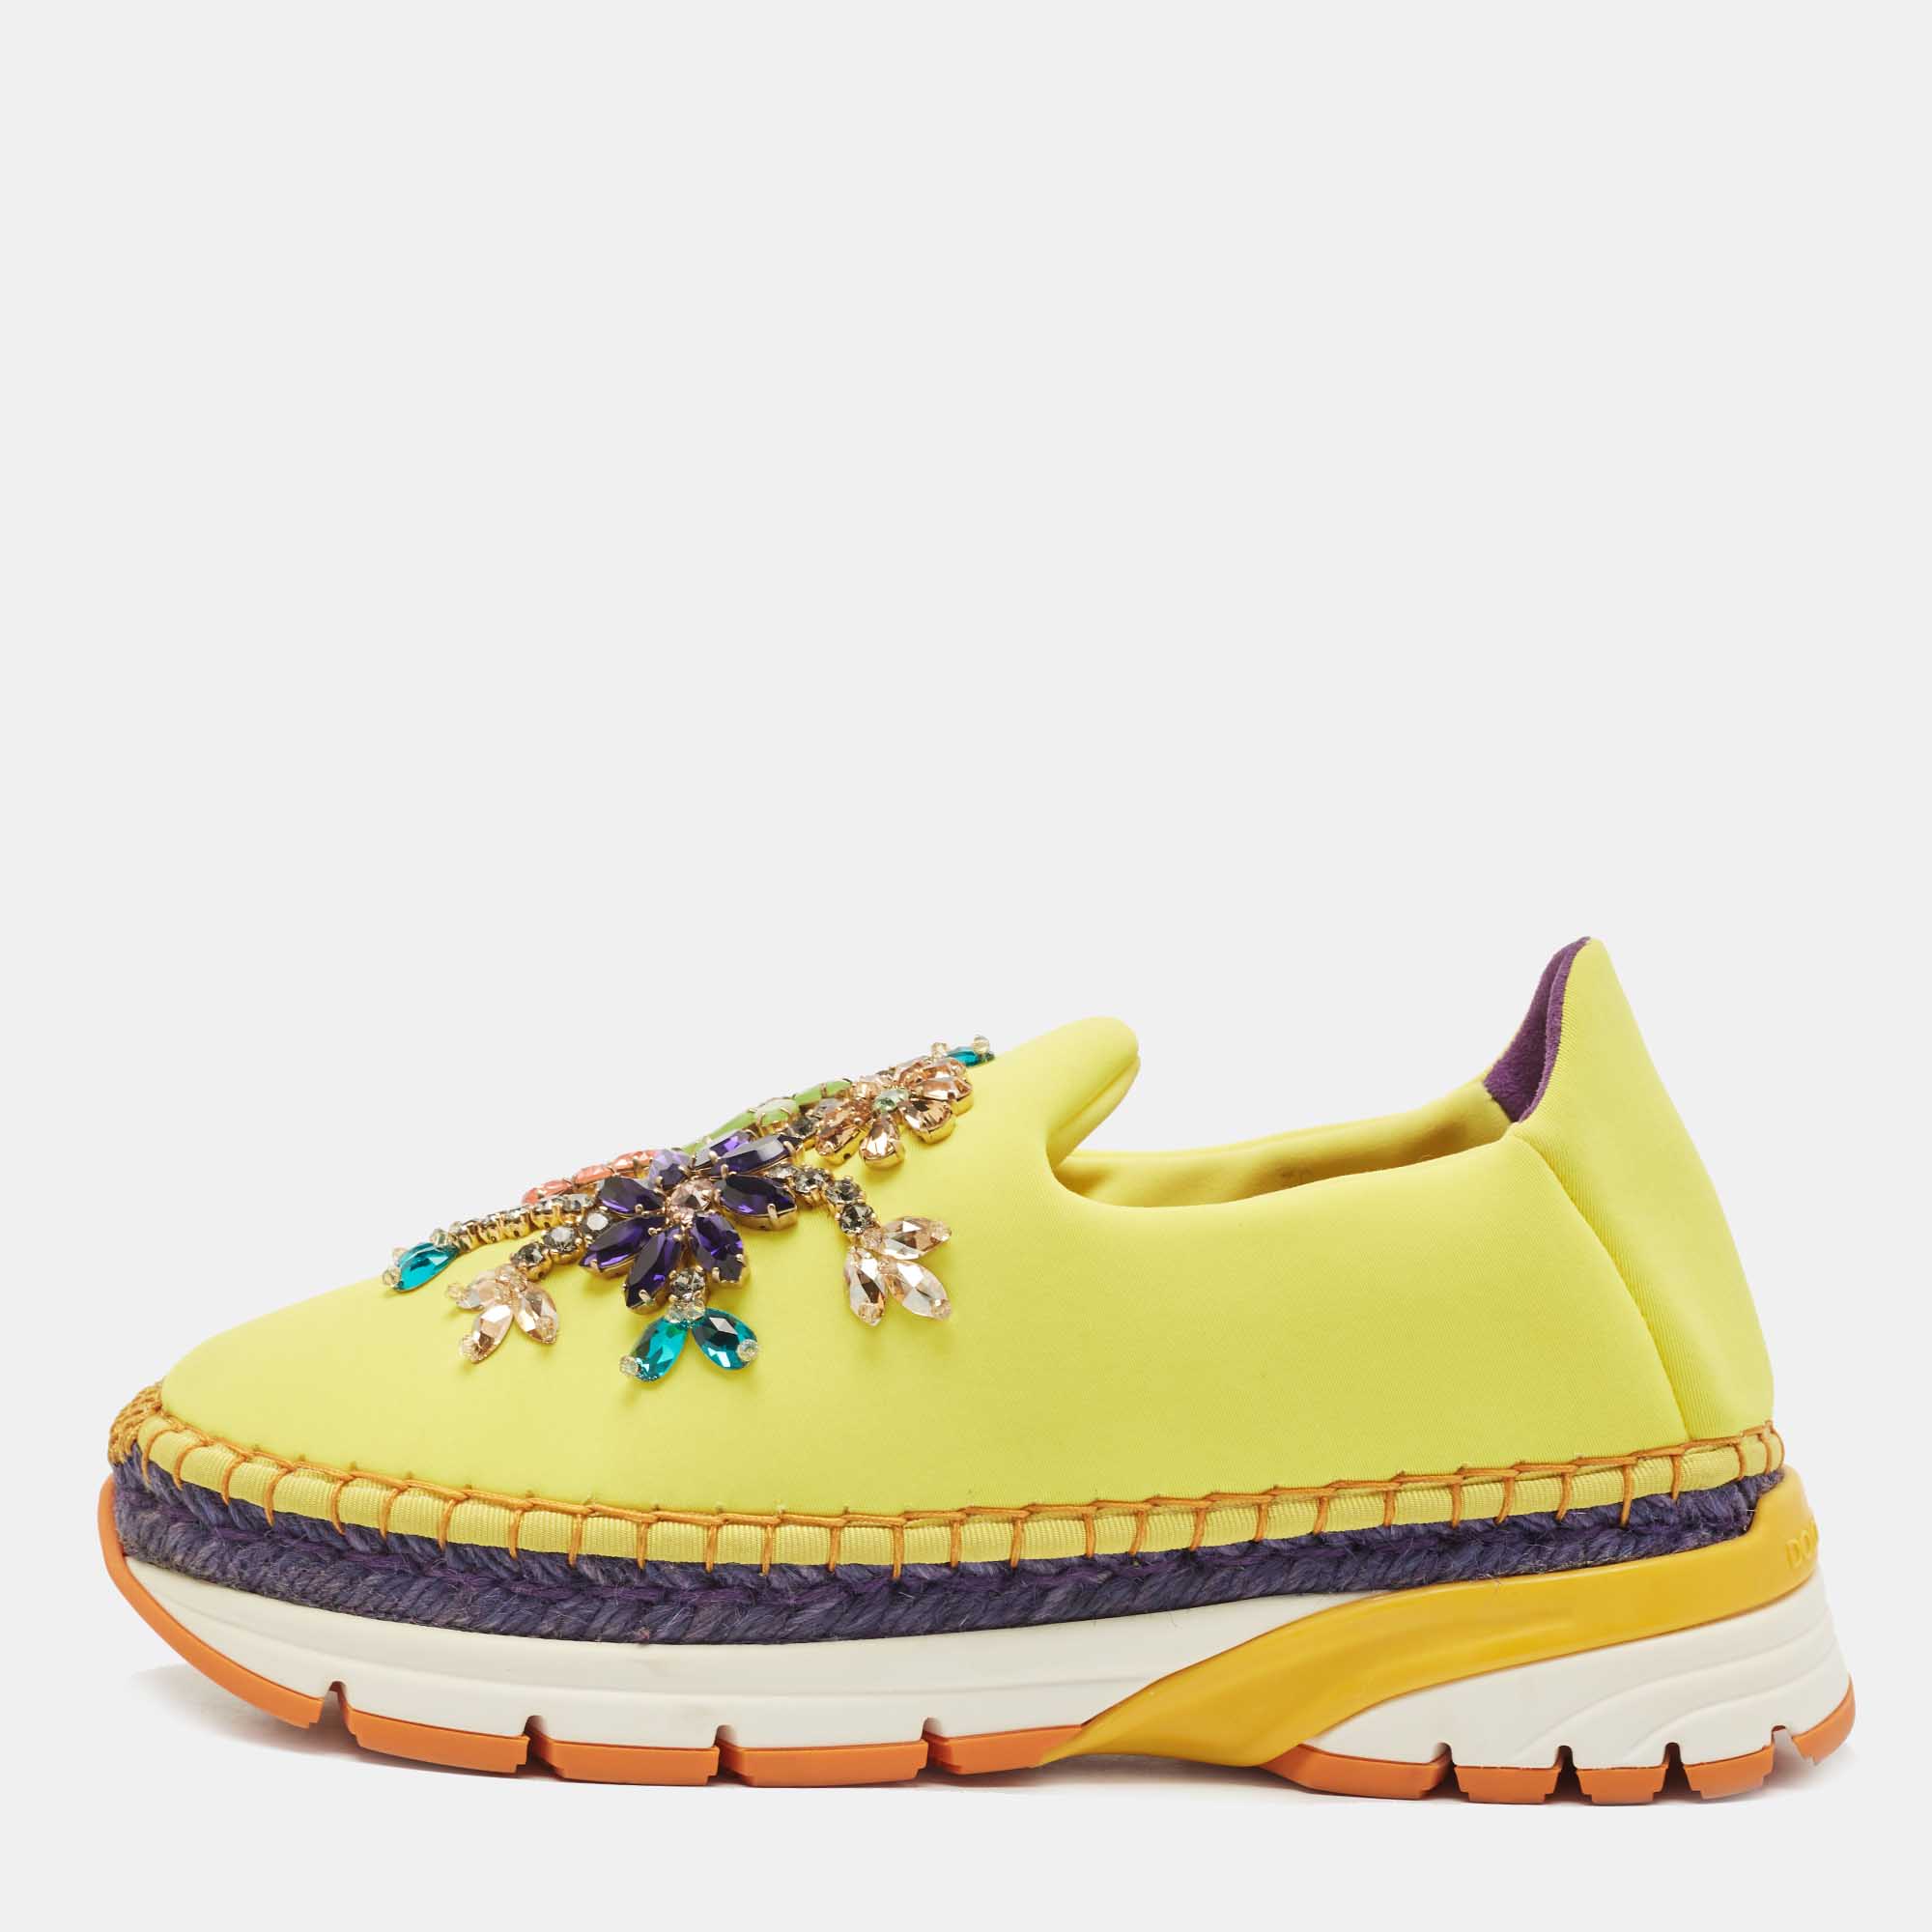 Dolce & Gabbana Yellow Neoprene Barcelona Embellished Slip On Sneakers Size 38